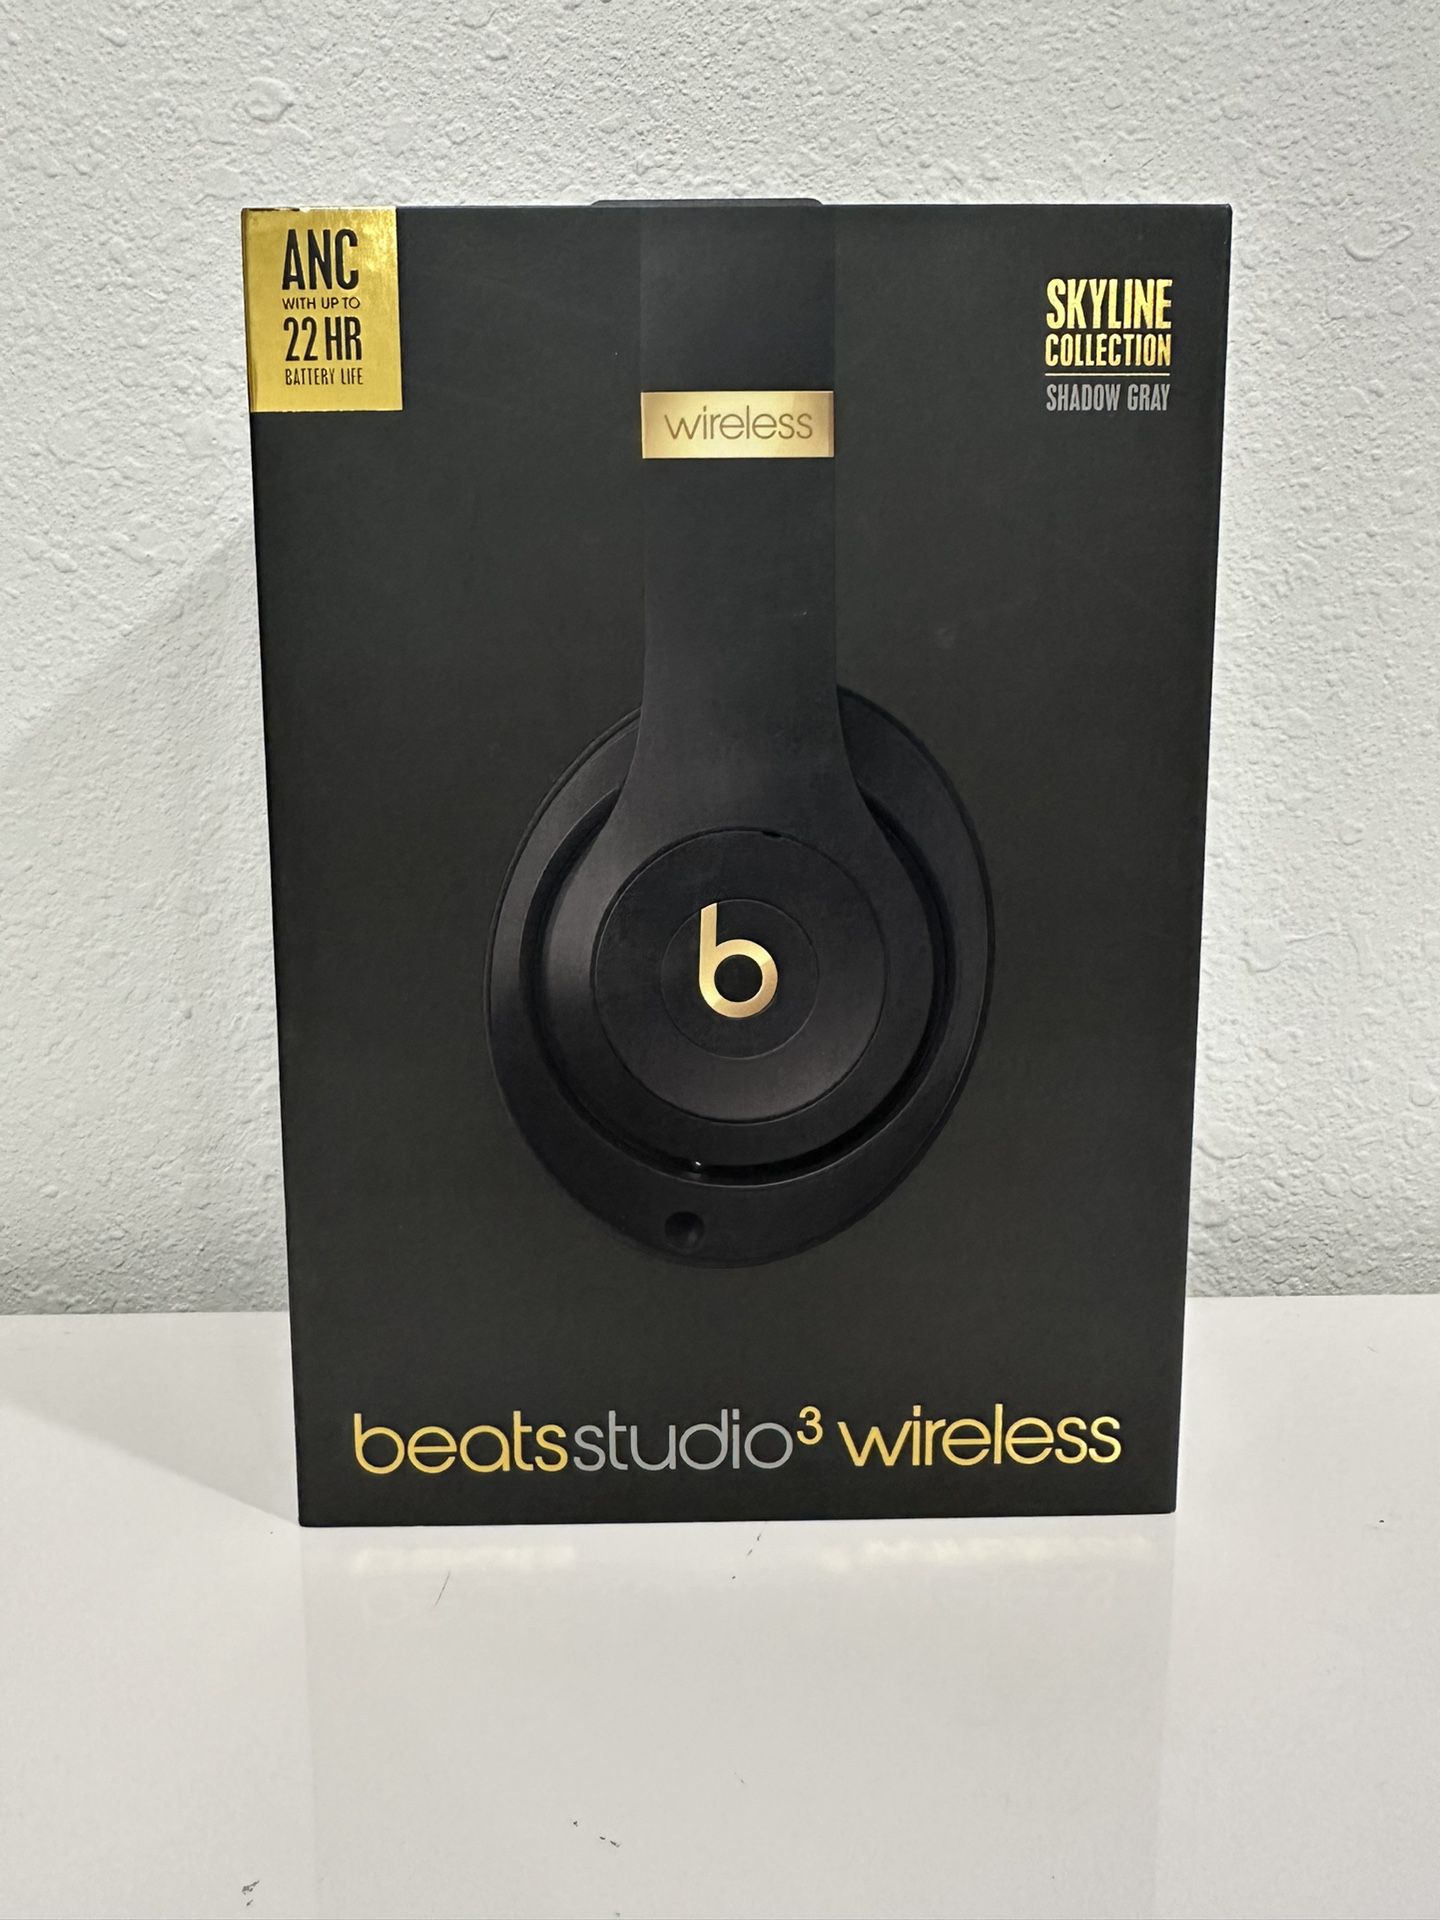 Beats Studio 3 Wireless SKYLINE Collection